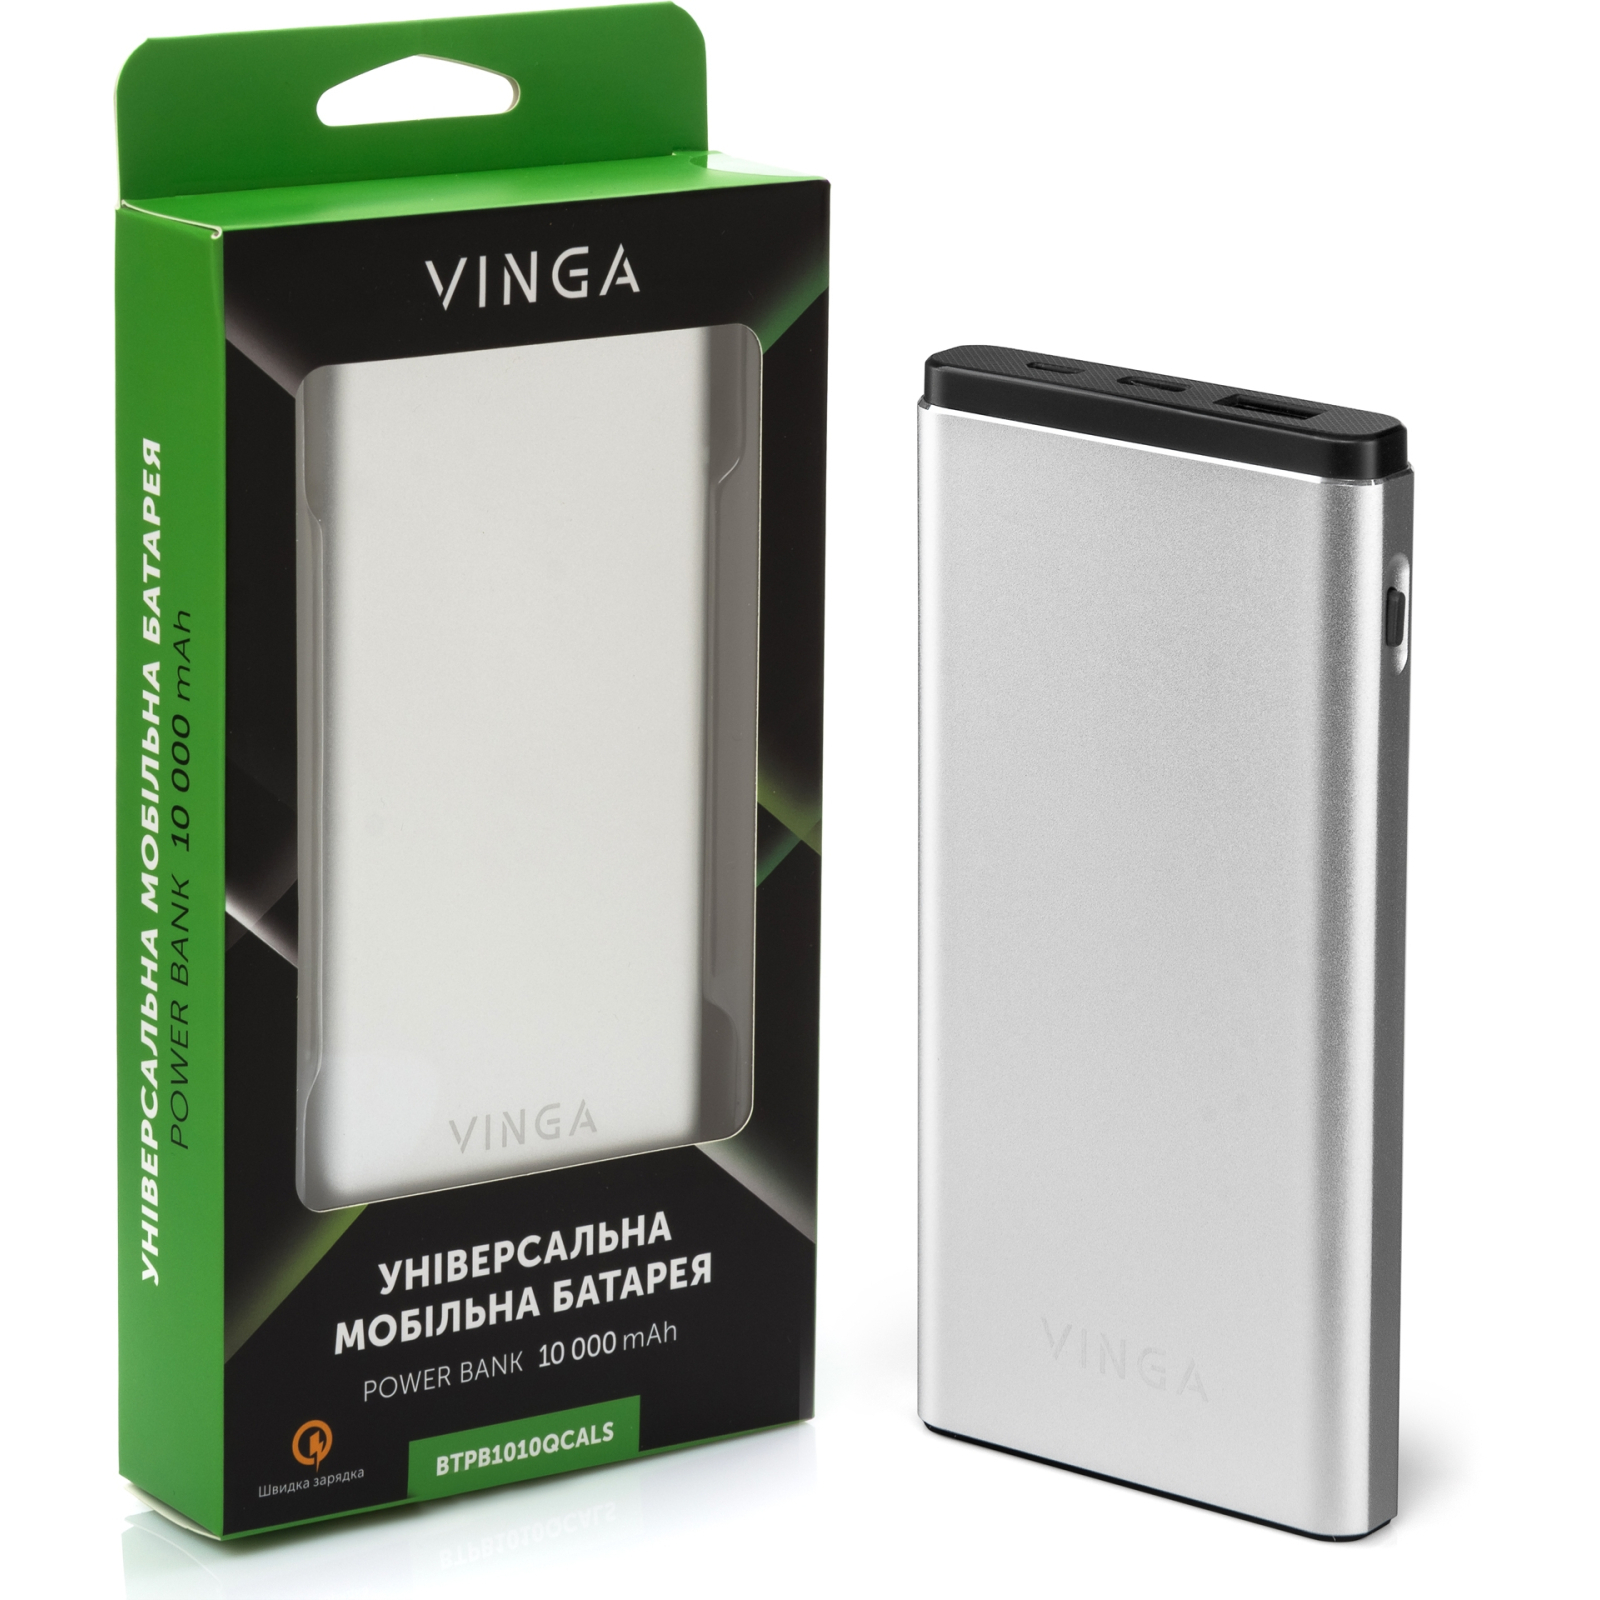 Батарея універсальна Vinga 10000 mAh QC3.0 PD aluminium silver (BTPB1010QCALS) зображення 5